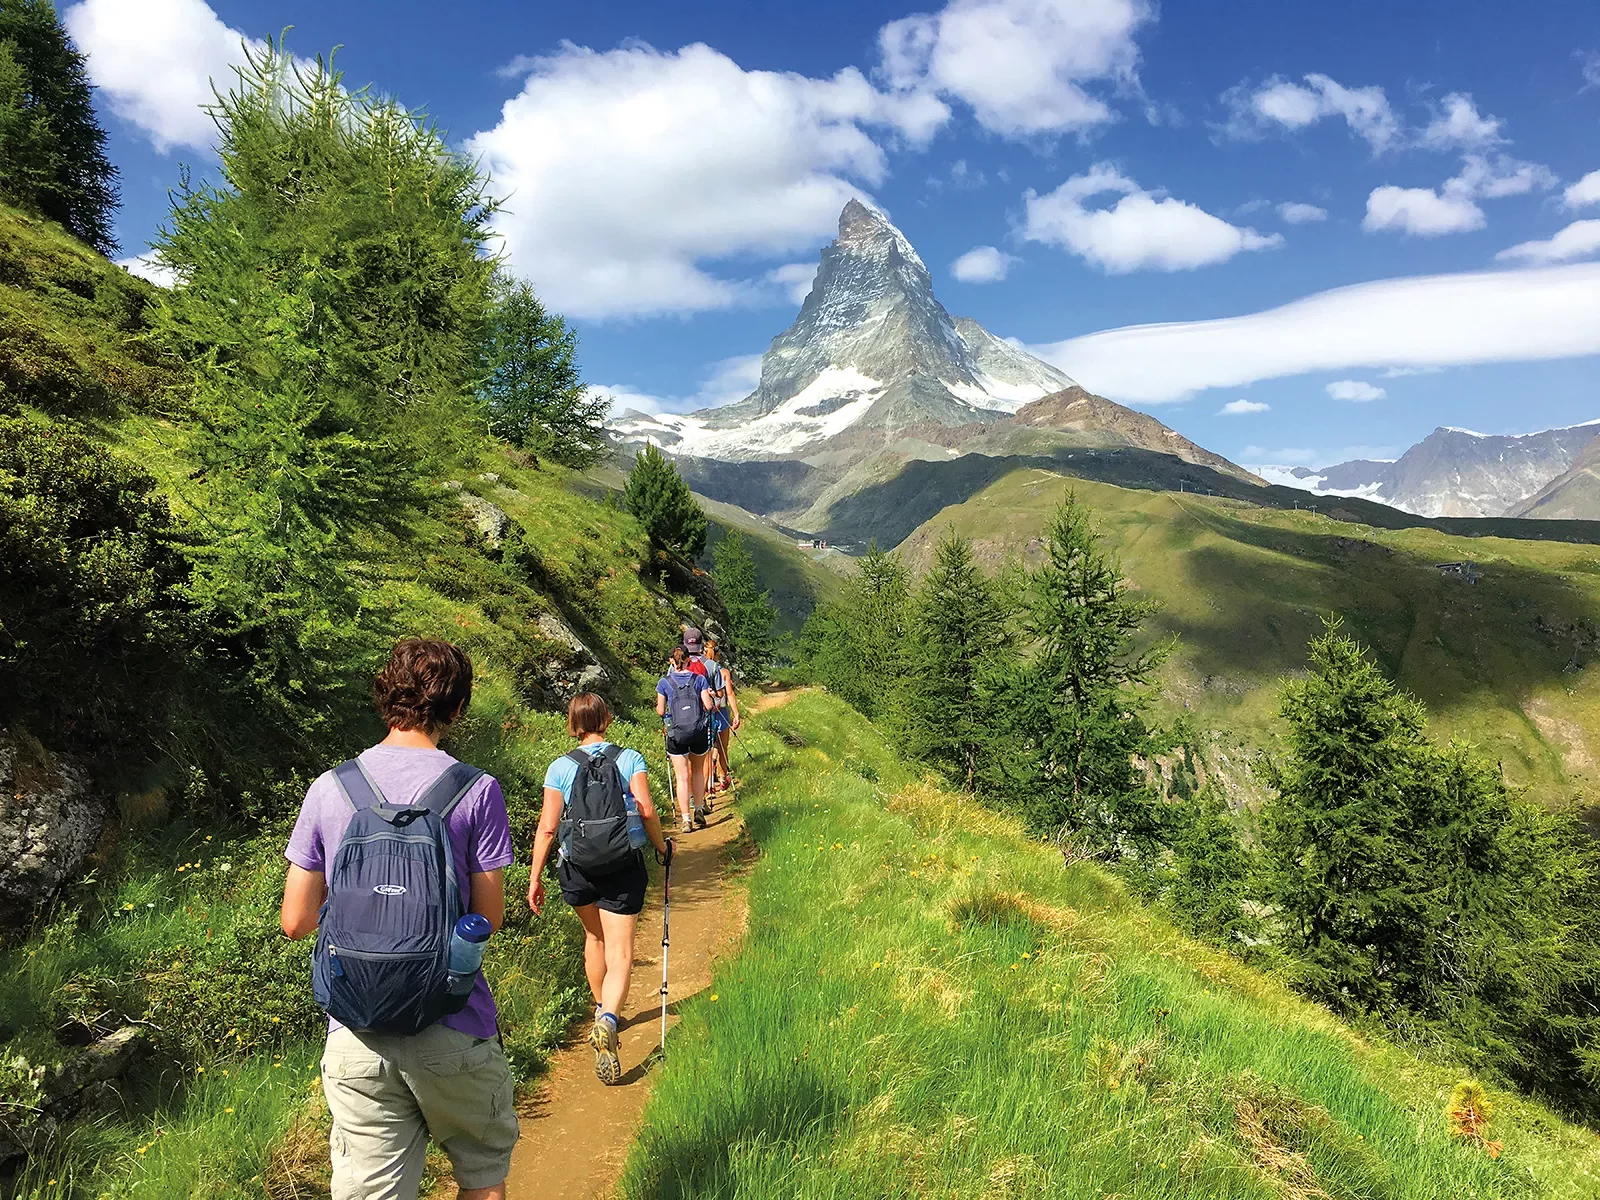 Group of guests on hillside trail, Matterhorn in distance.